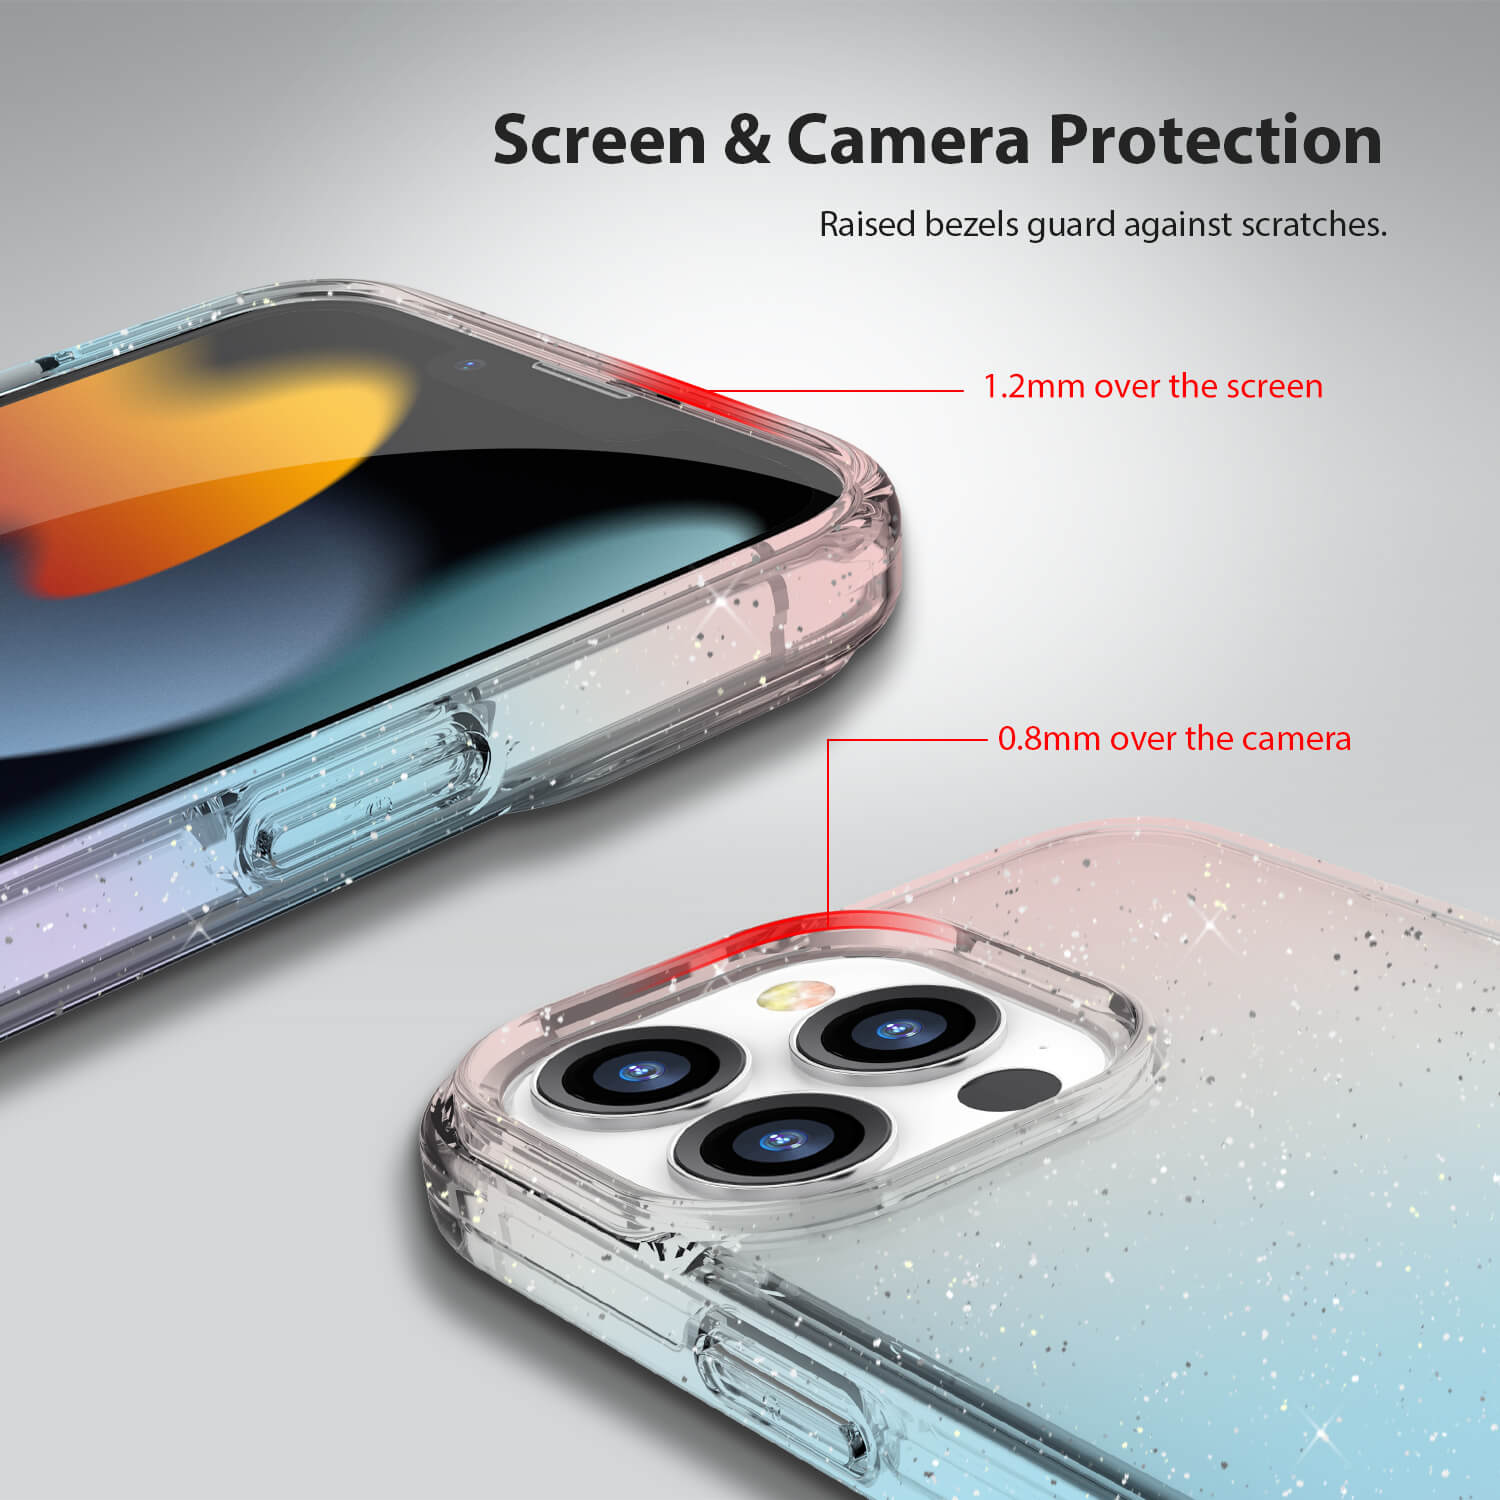 Tough On iPhone 13 Pro Max Case Glitter Iridescent